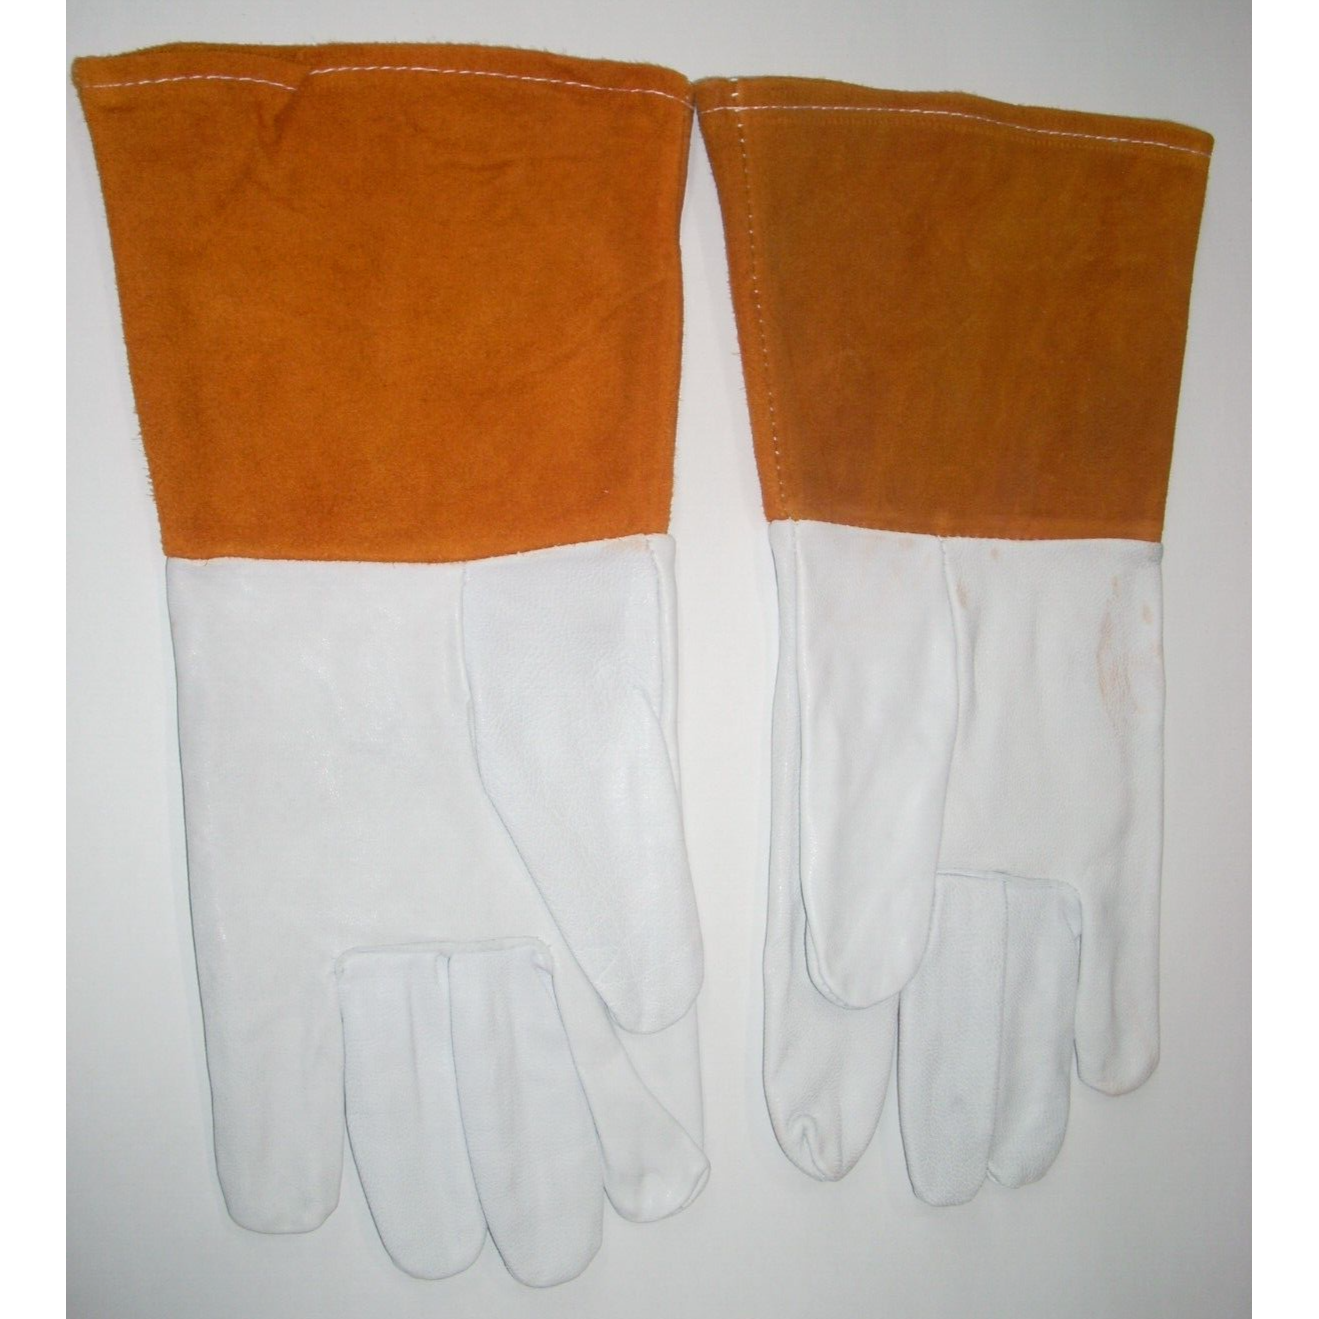 Mig Tig Welding Goatskin Welding Gloves Large Dozen